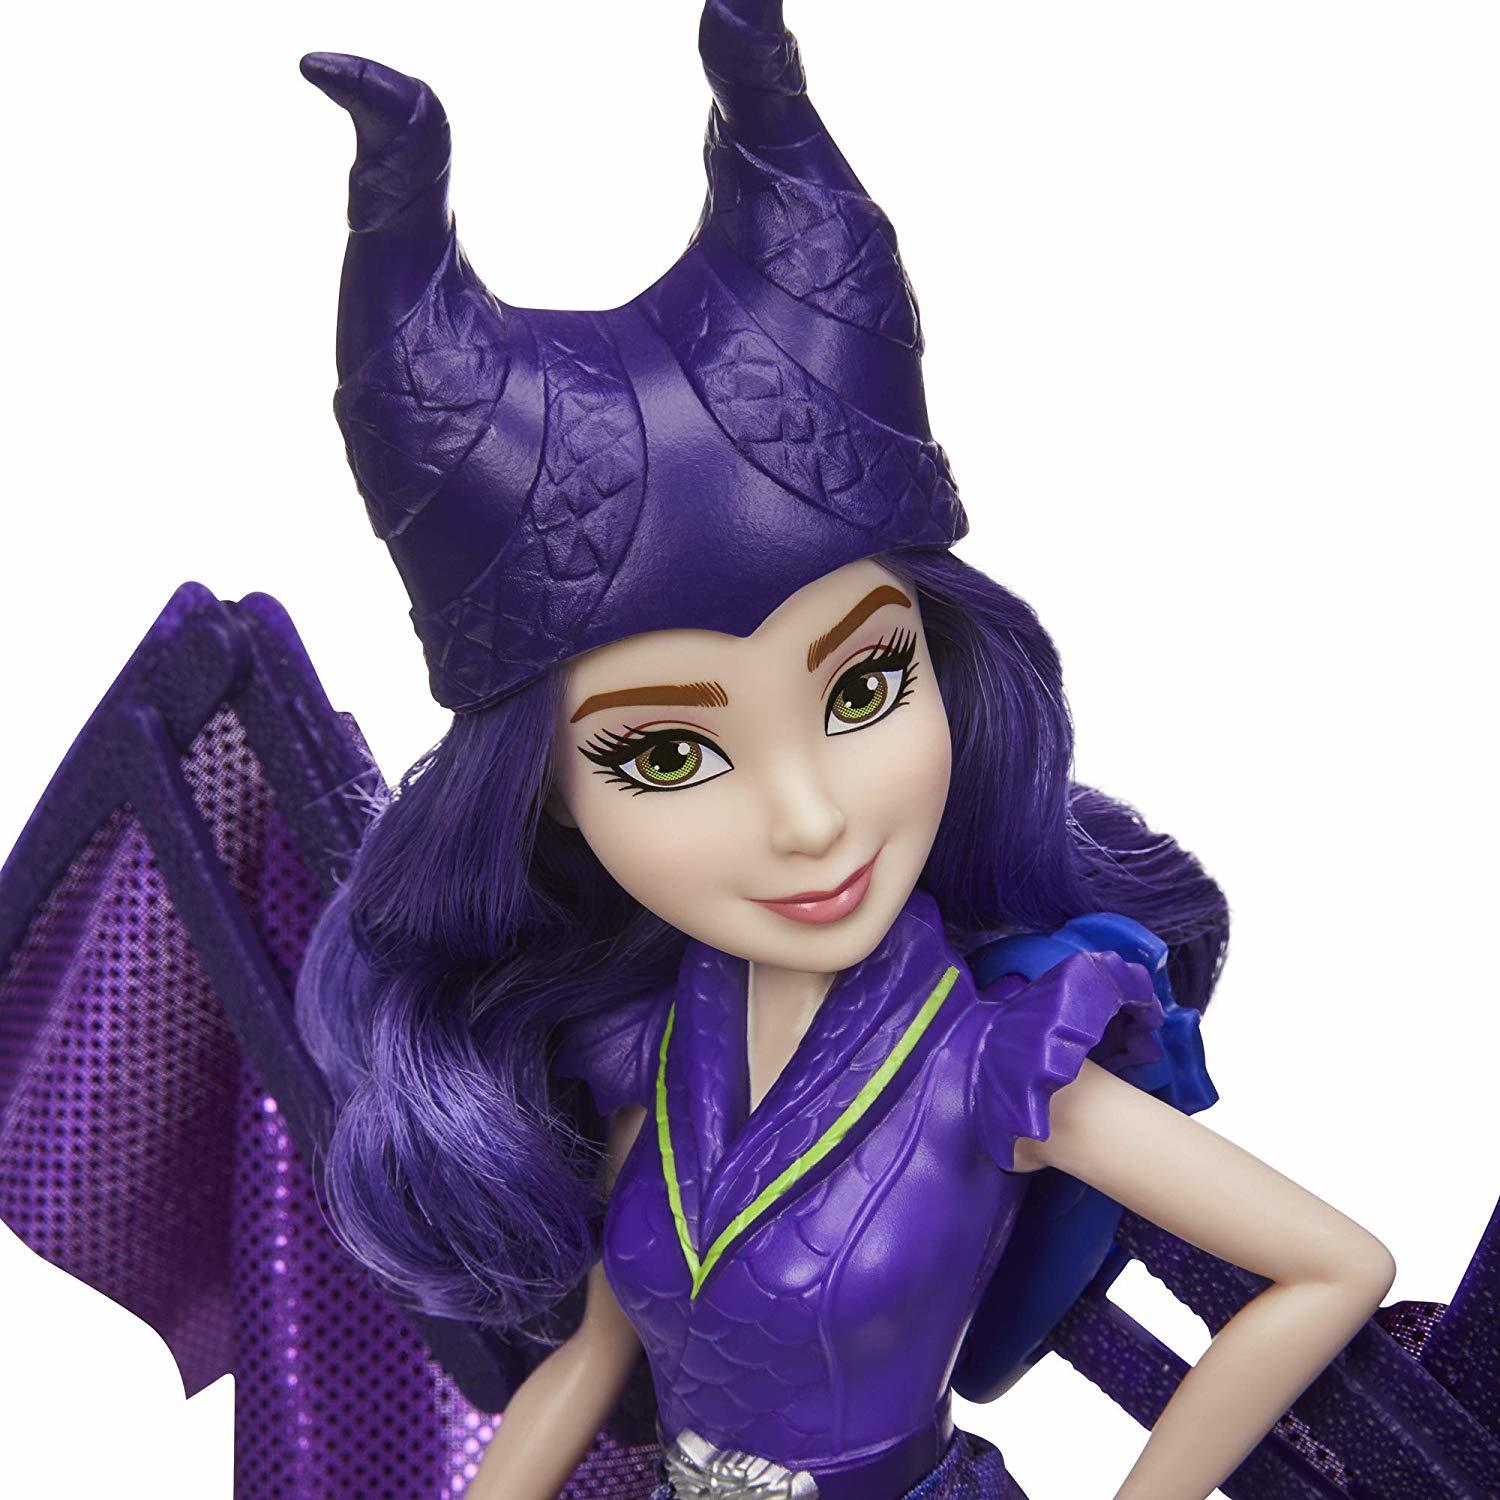 Disney Descendants Dragon Queen Mal, Fashion Doll Transforms to Winged Dragon